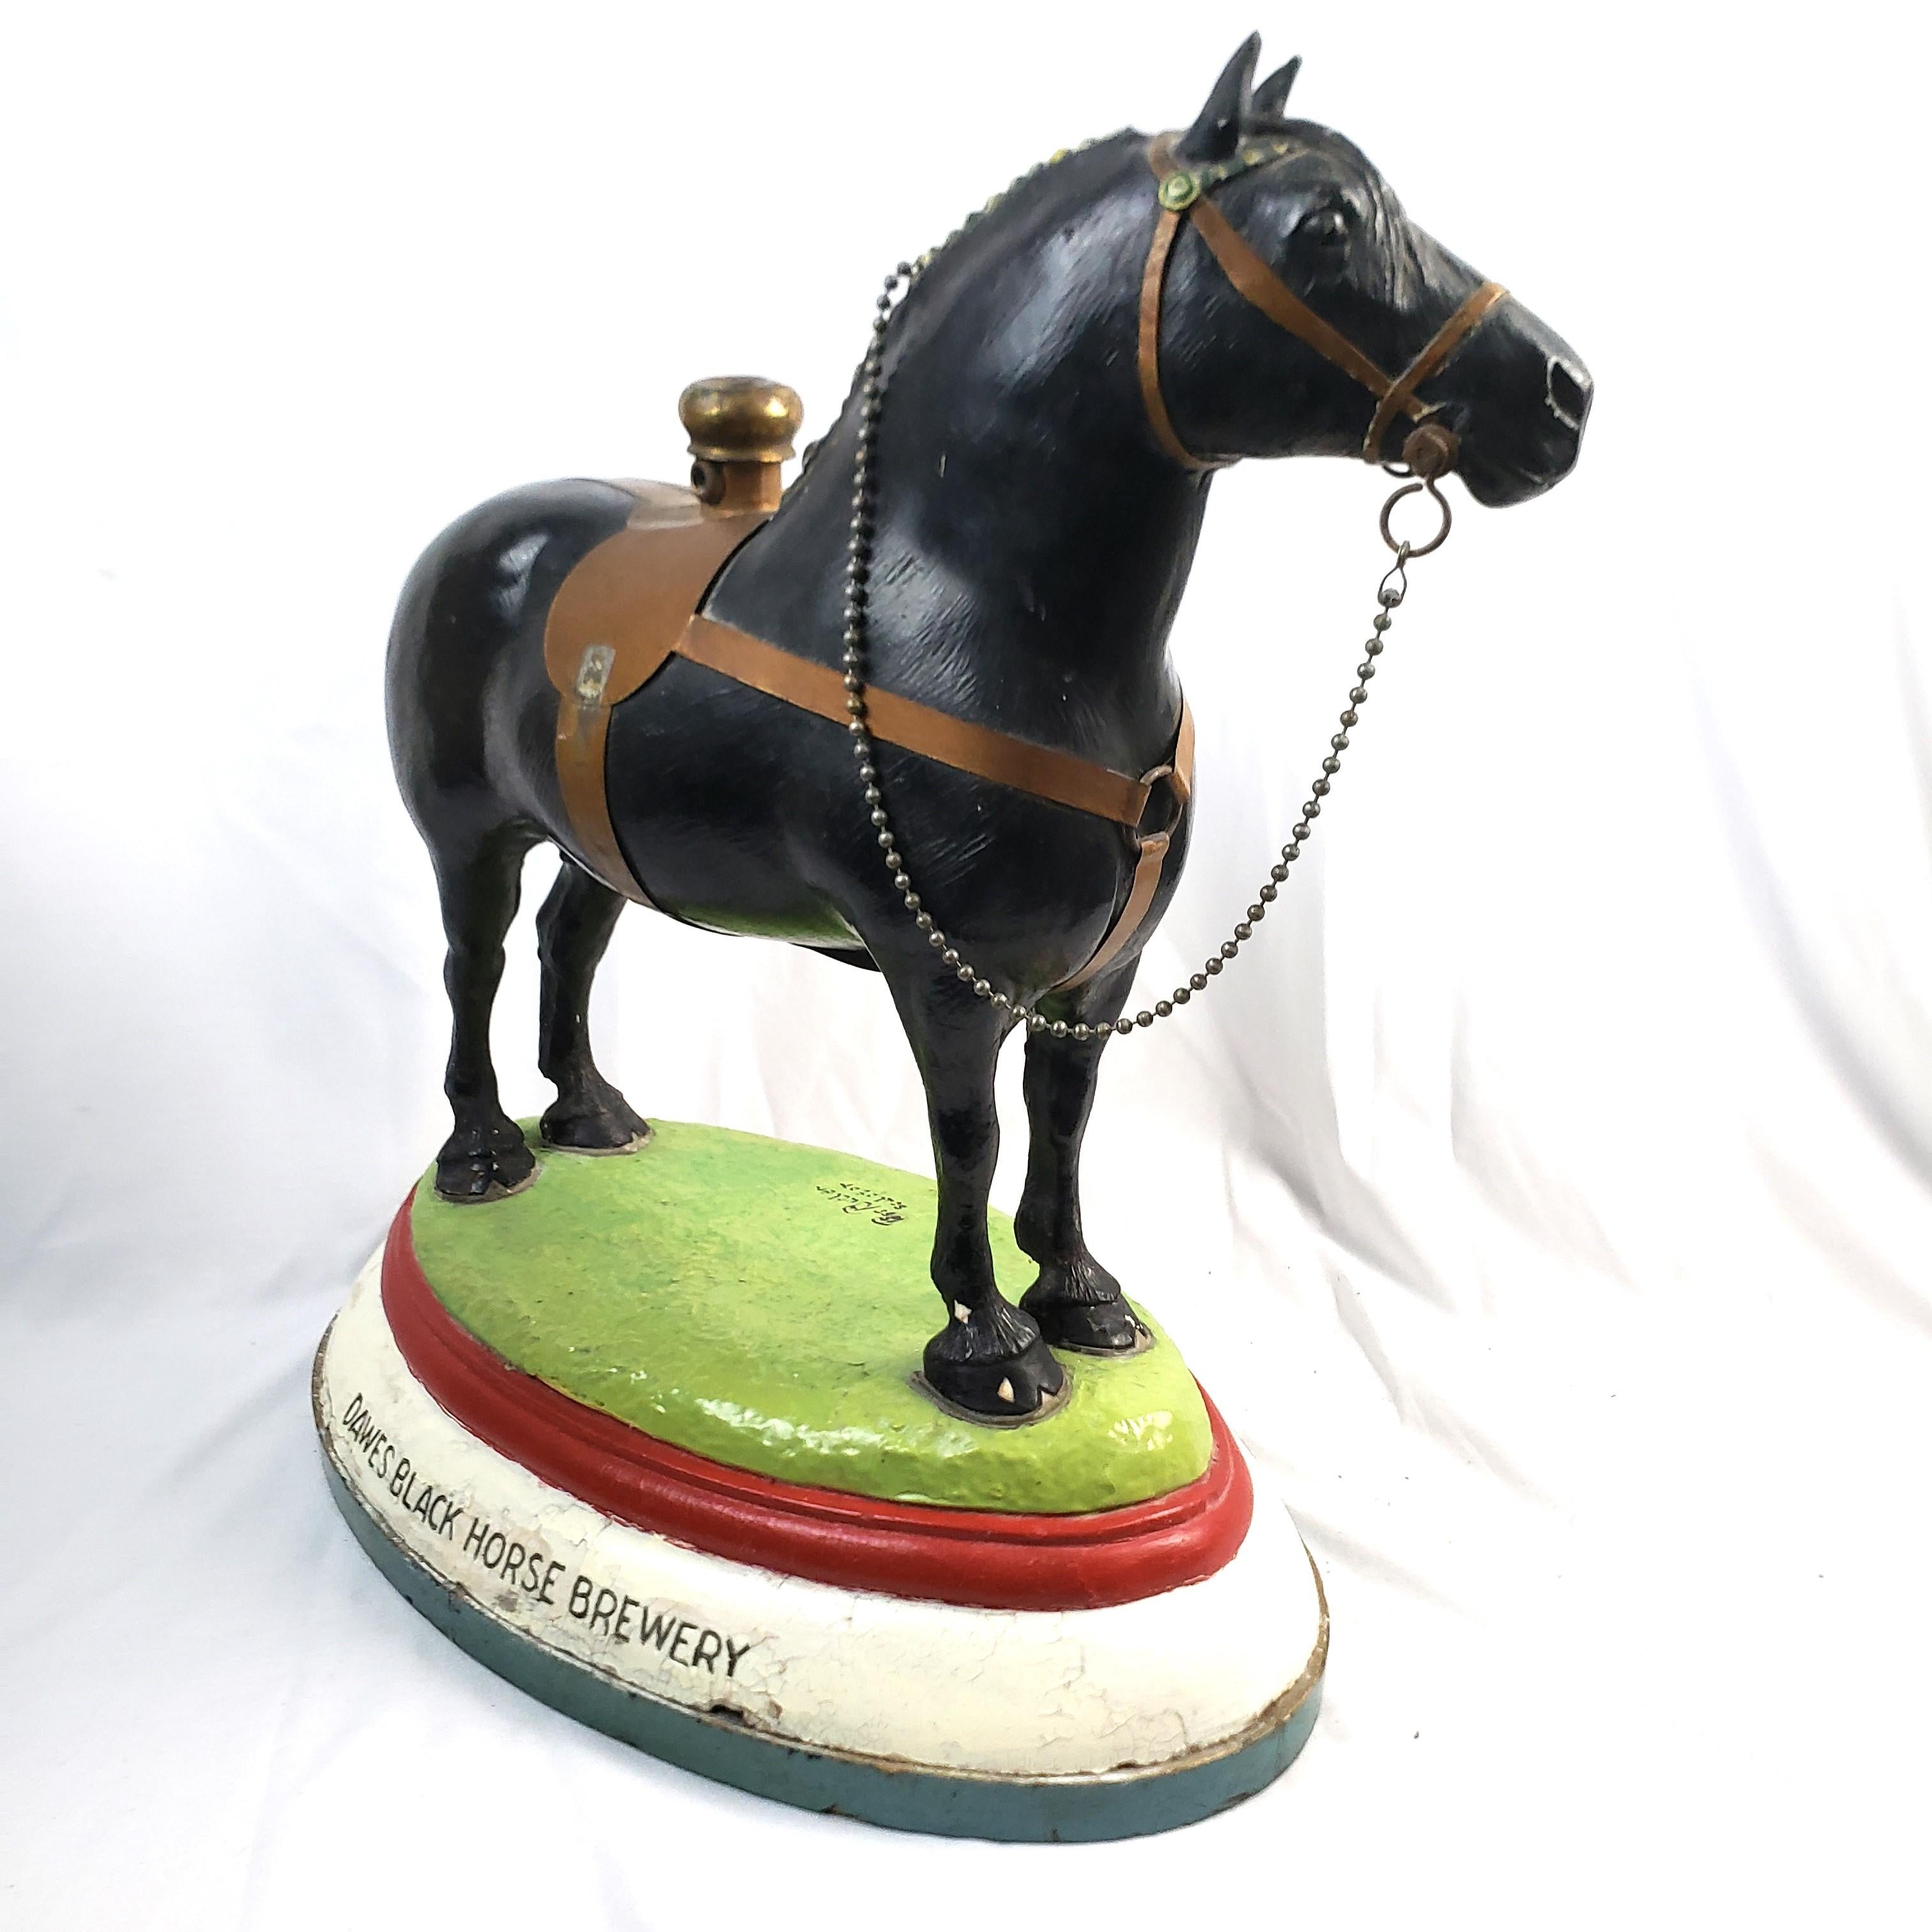 Dawes Black Horse Brewery Large Cast Advertising Horse Sculptural Lamp Base For Sale 6